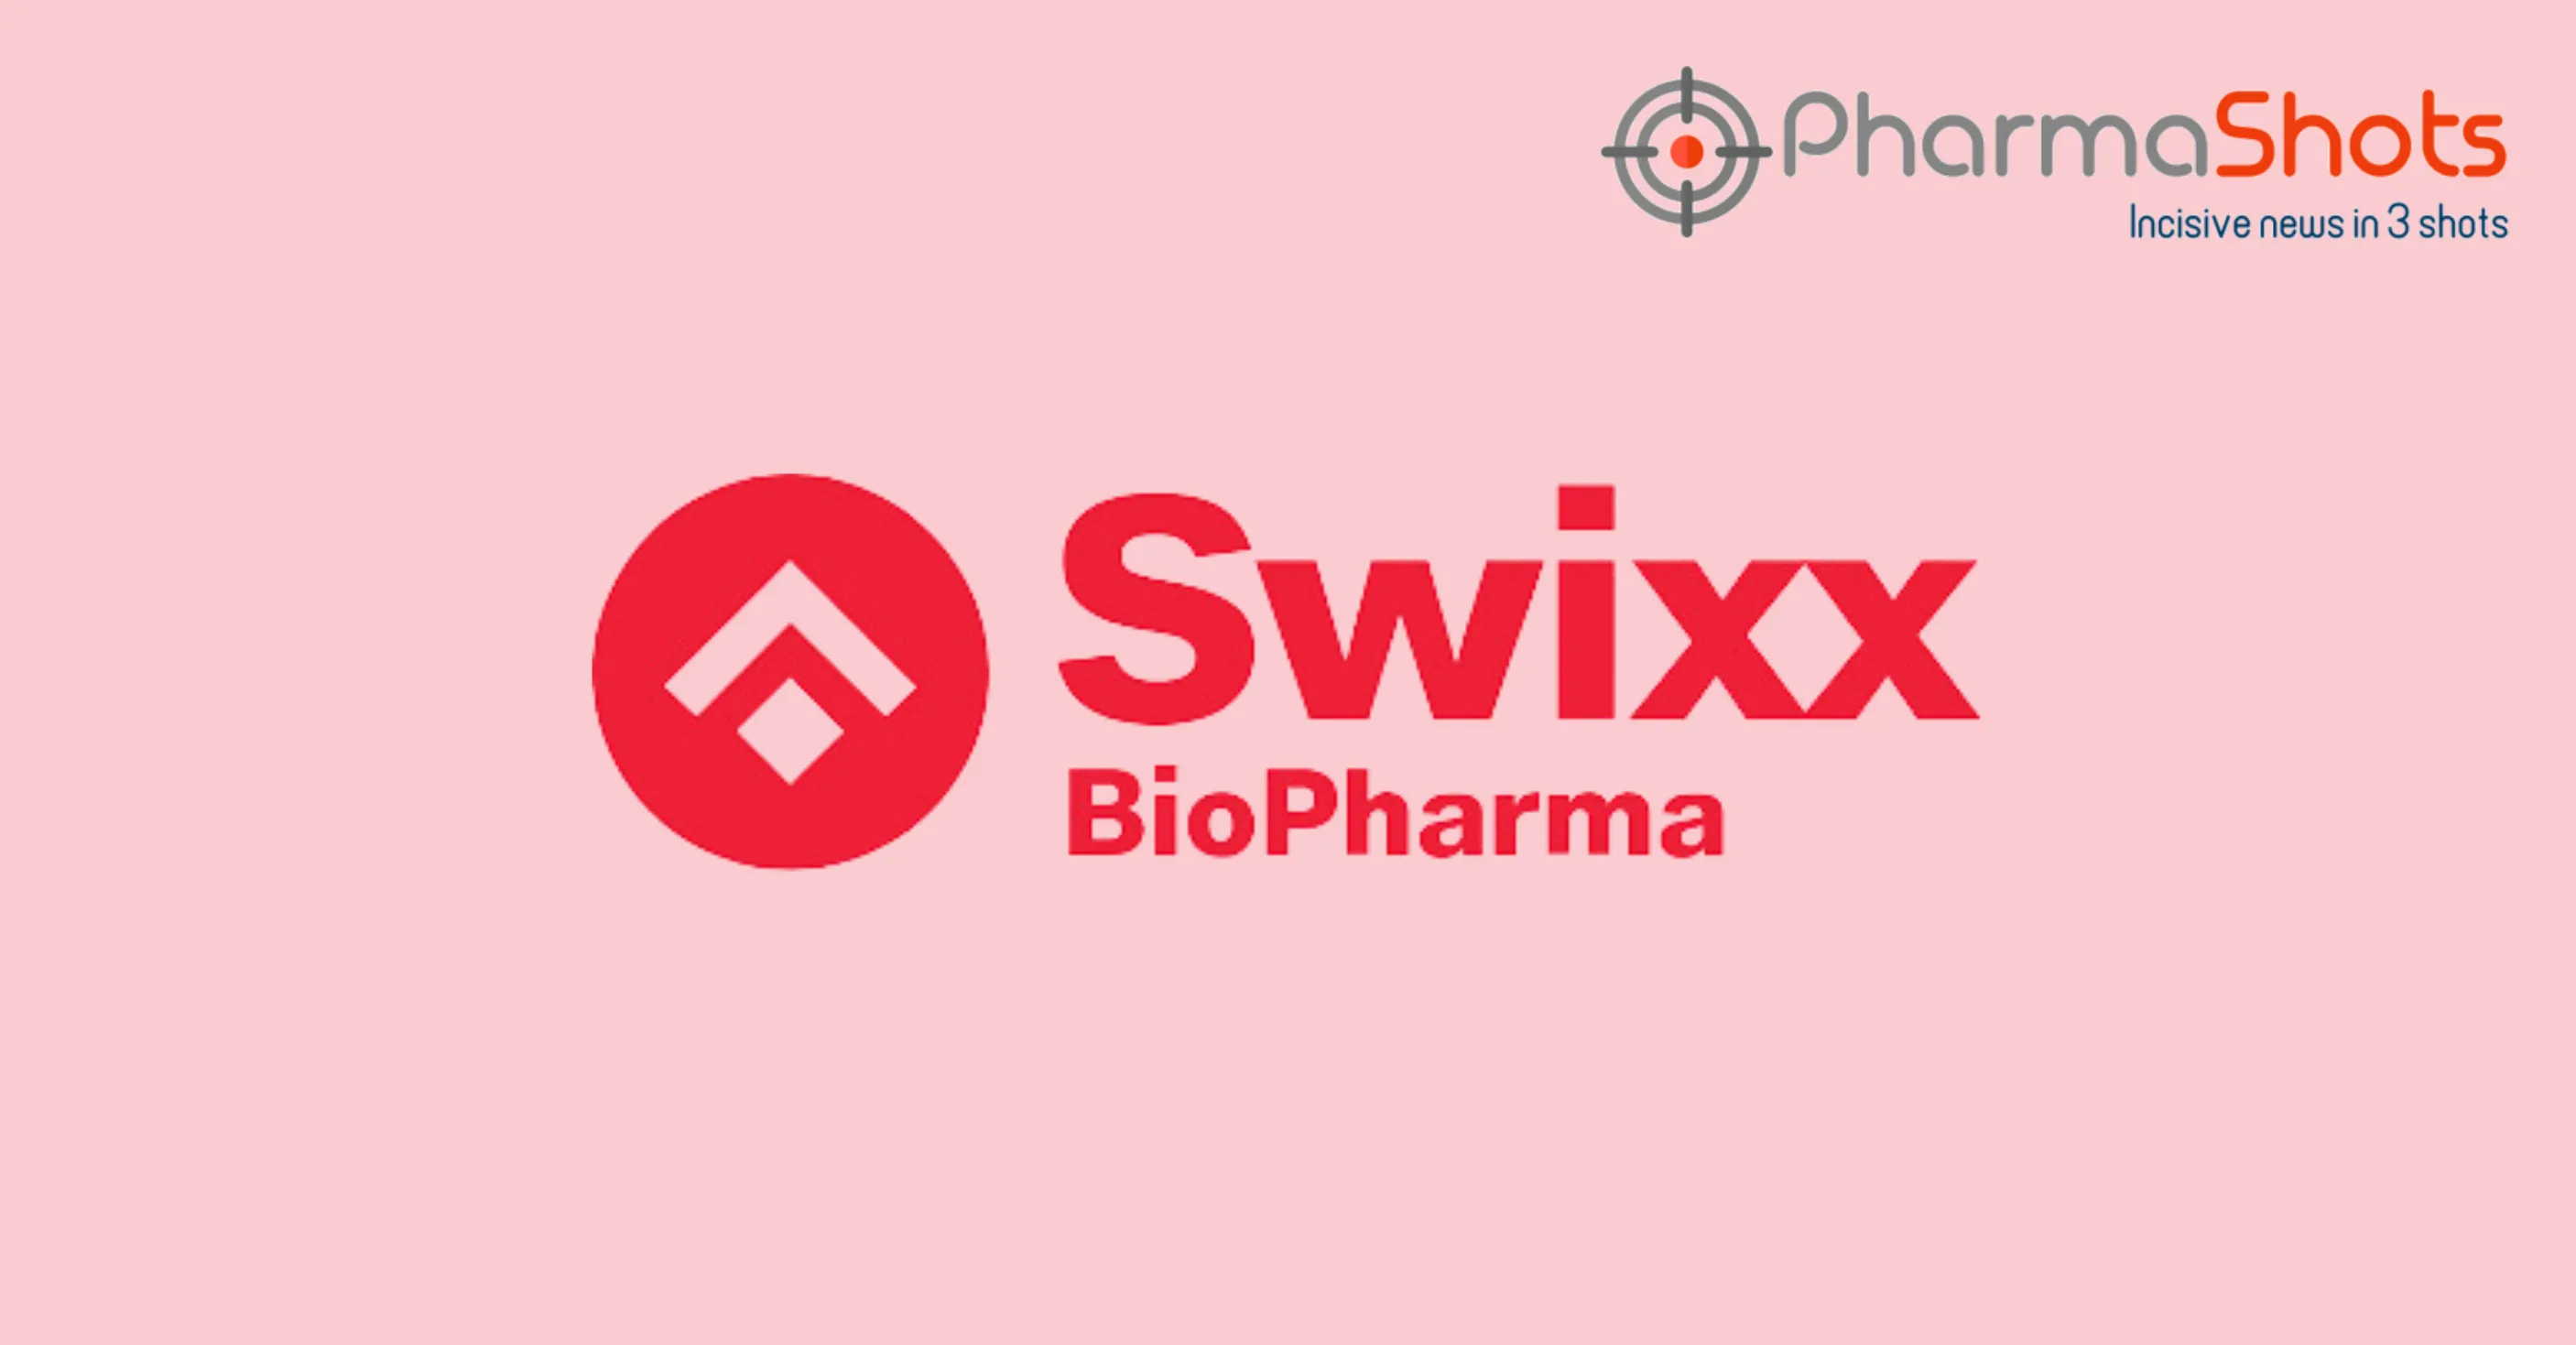 Swixx Biopharma Acquires Biopas, Expanding its Presence to Latin America